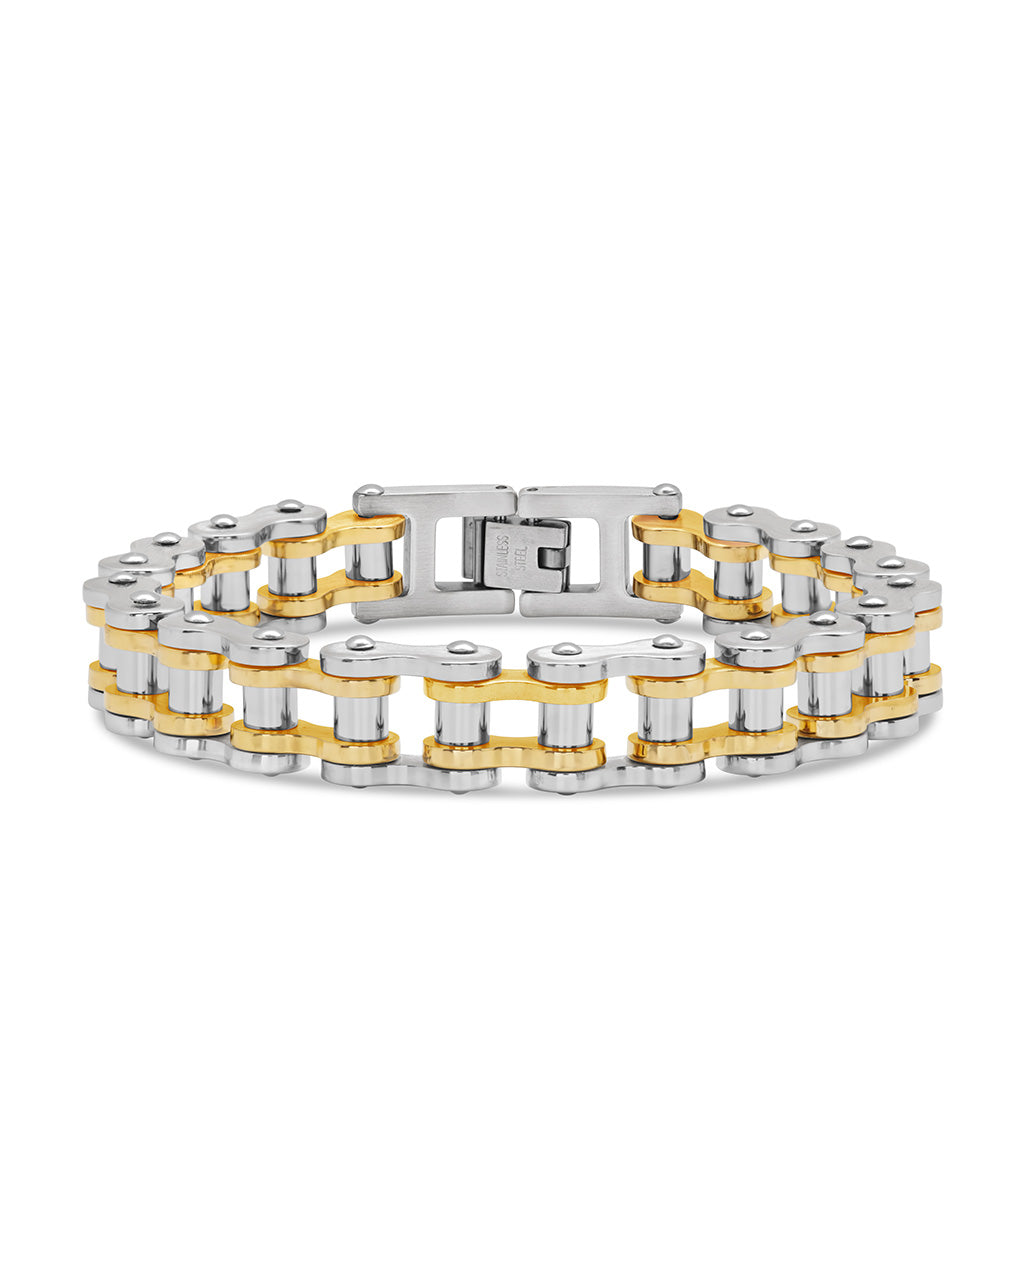 Bolt Watch Band Chain Bracelet Bracelet Sterling Forever Silver + Gold 